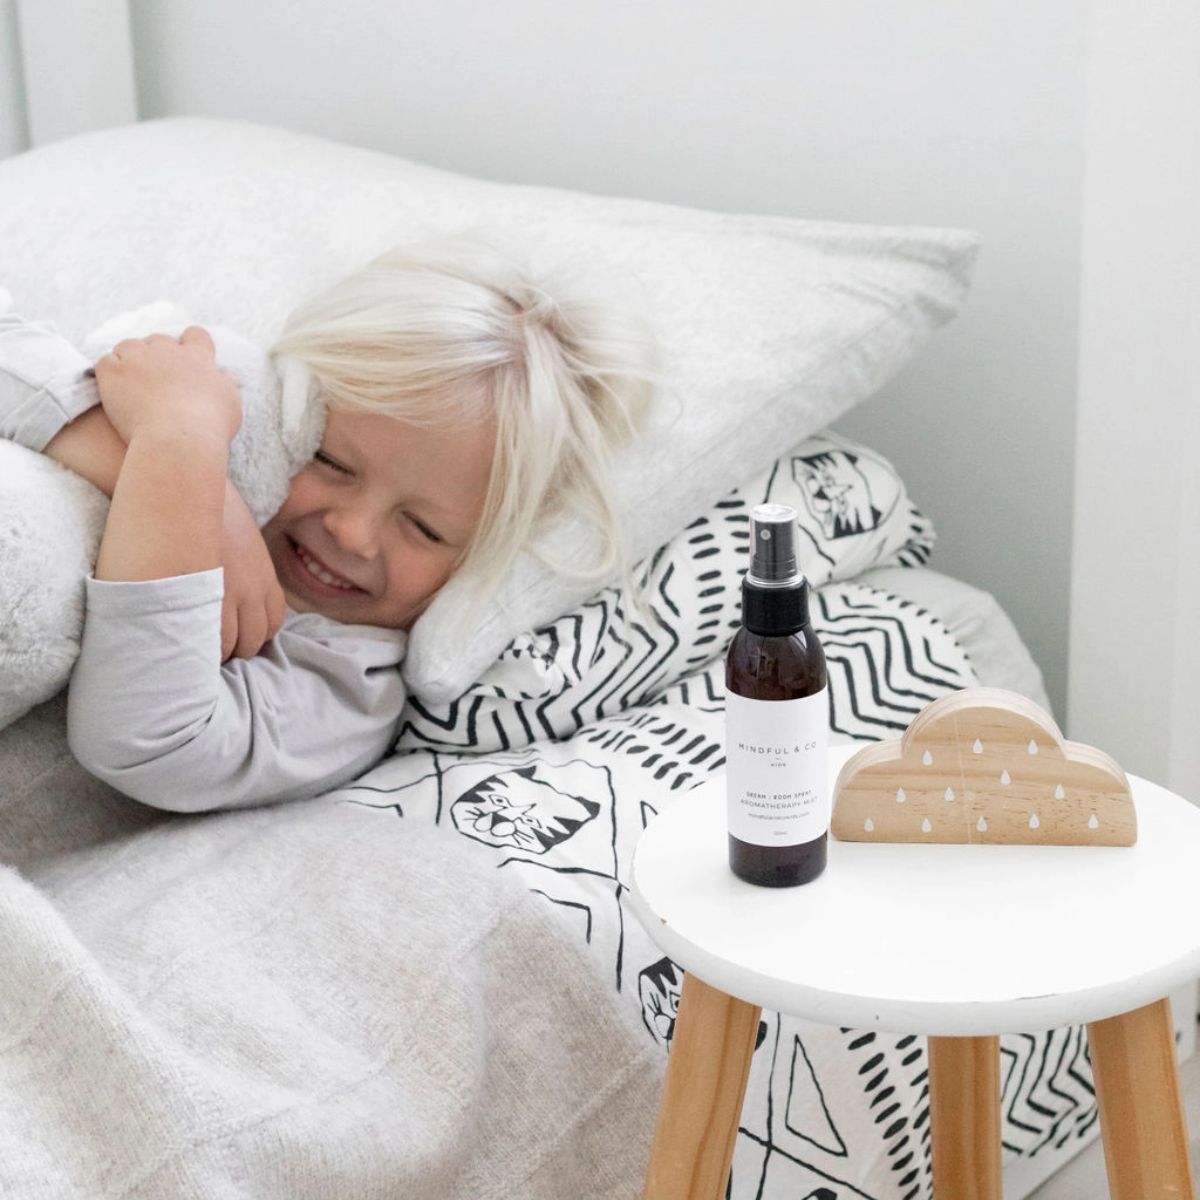 Dream Aromatherapy Mist - Promotes Restful Sleep for Children